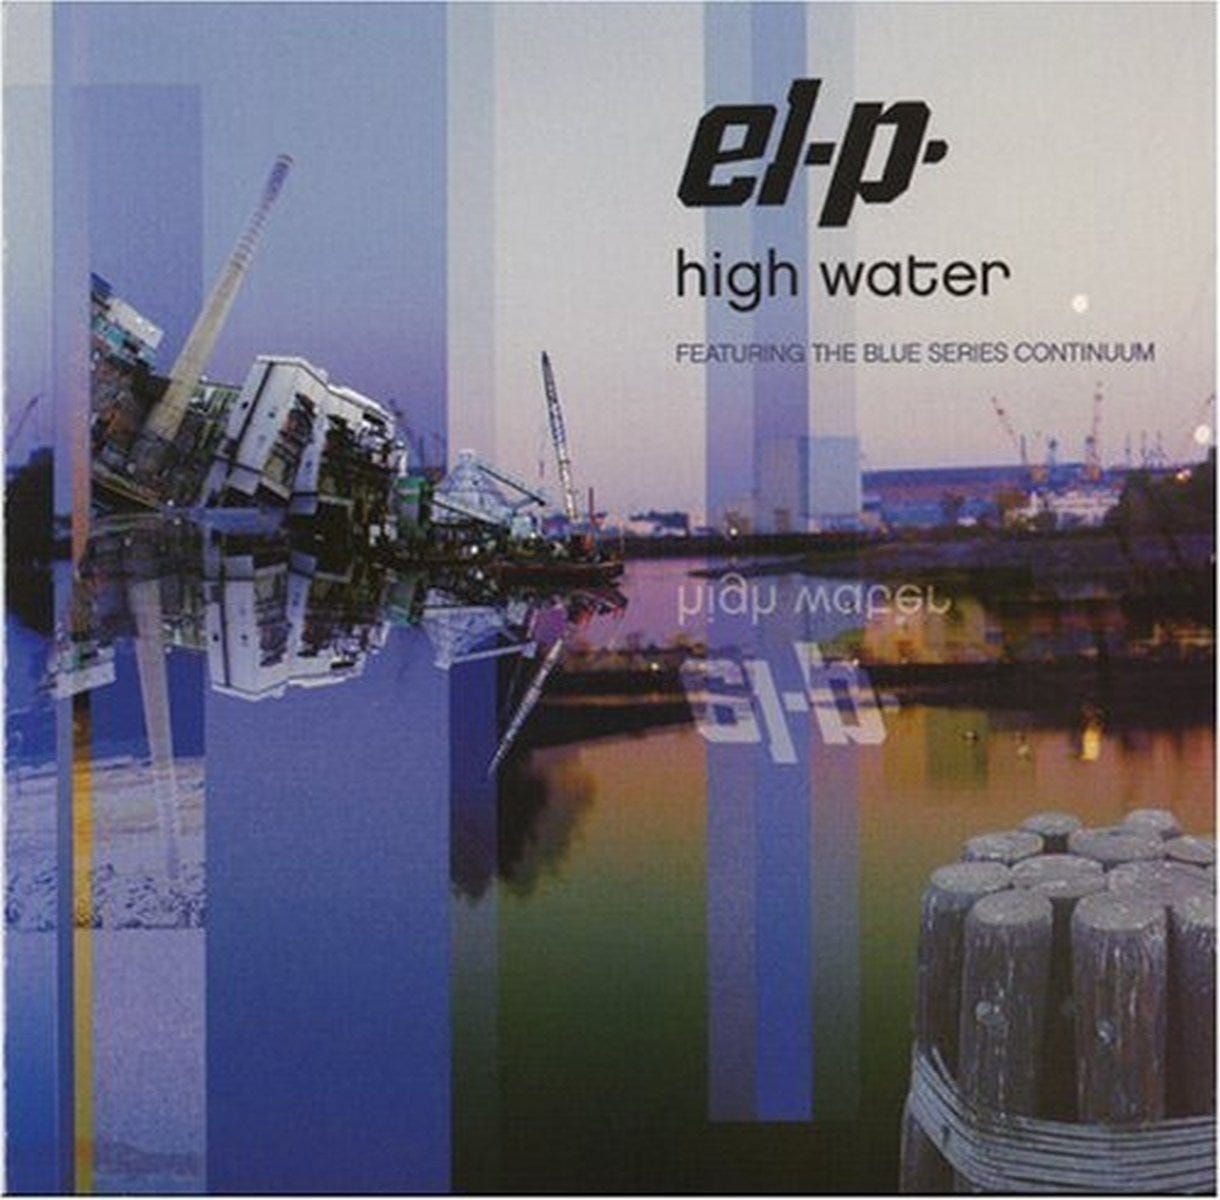 El-P - High Water album cover